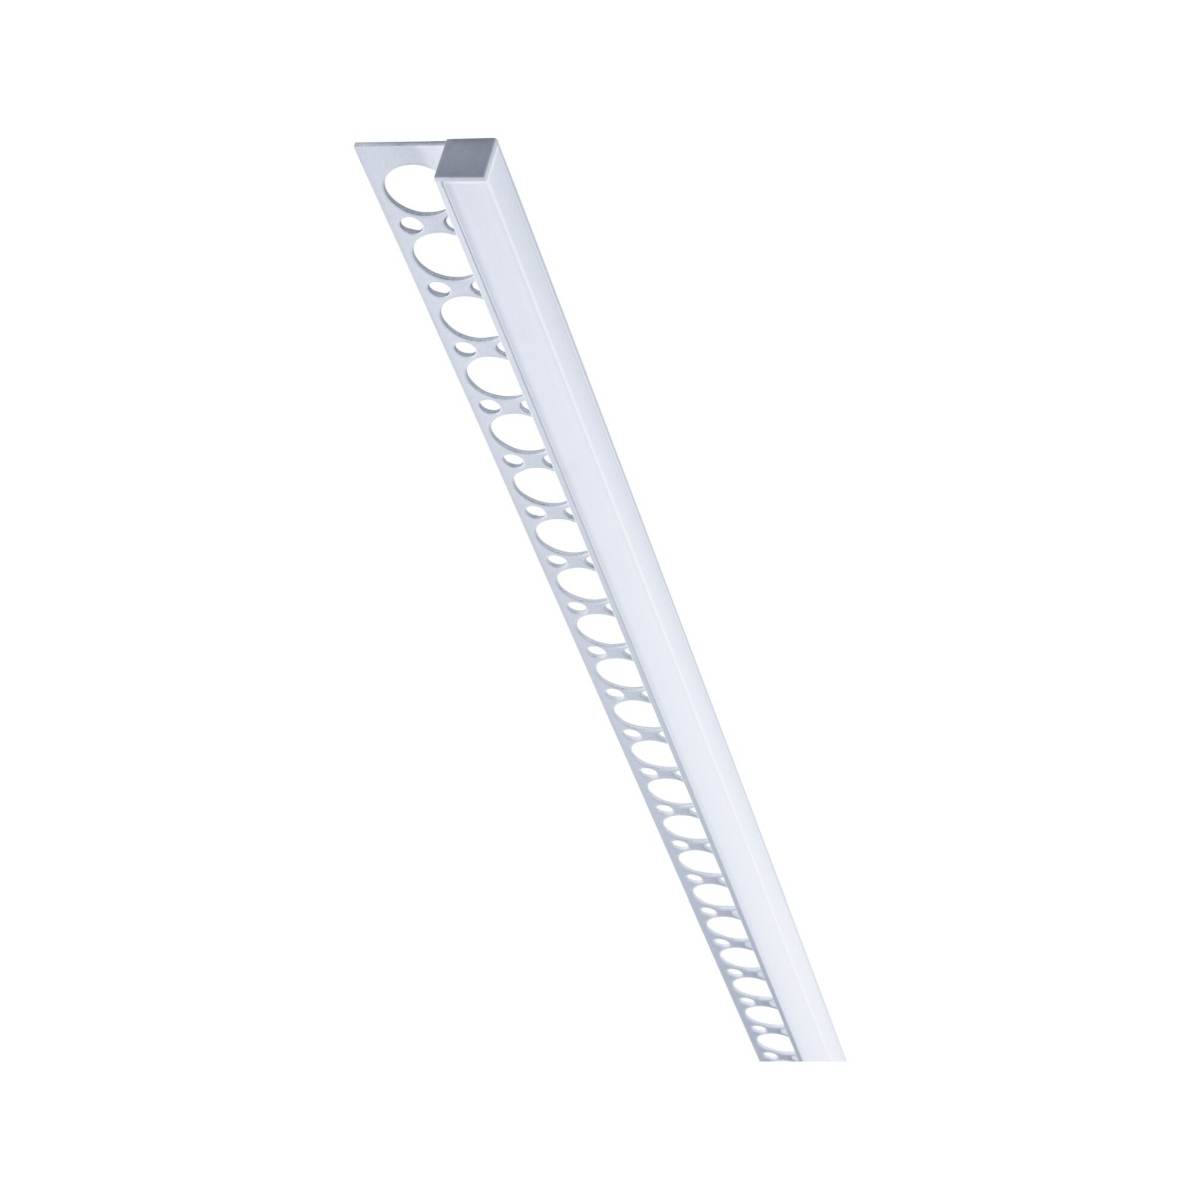 Paulmann LumiTiles LED 1 m, Strip 2 m oder Einbauprofil Frame Profil, Aluminium, Rahmenprofil